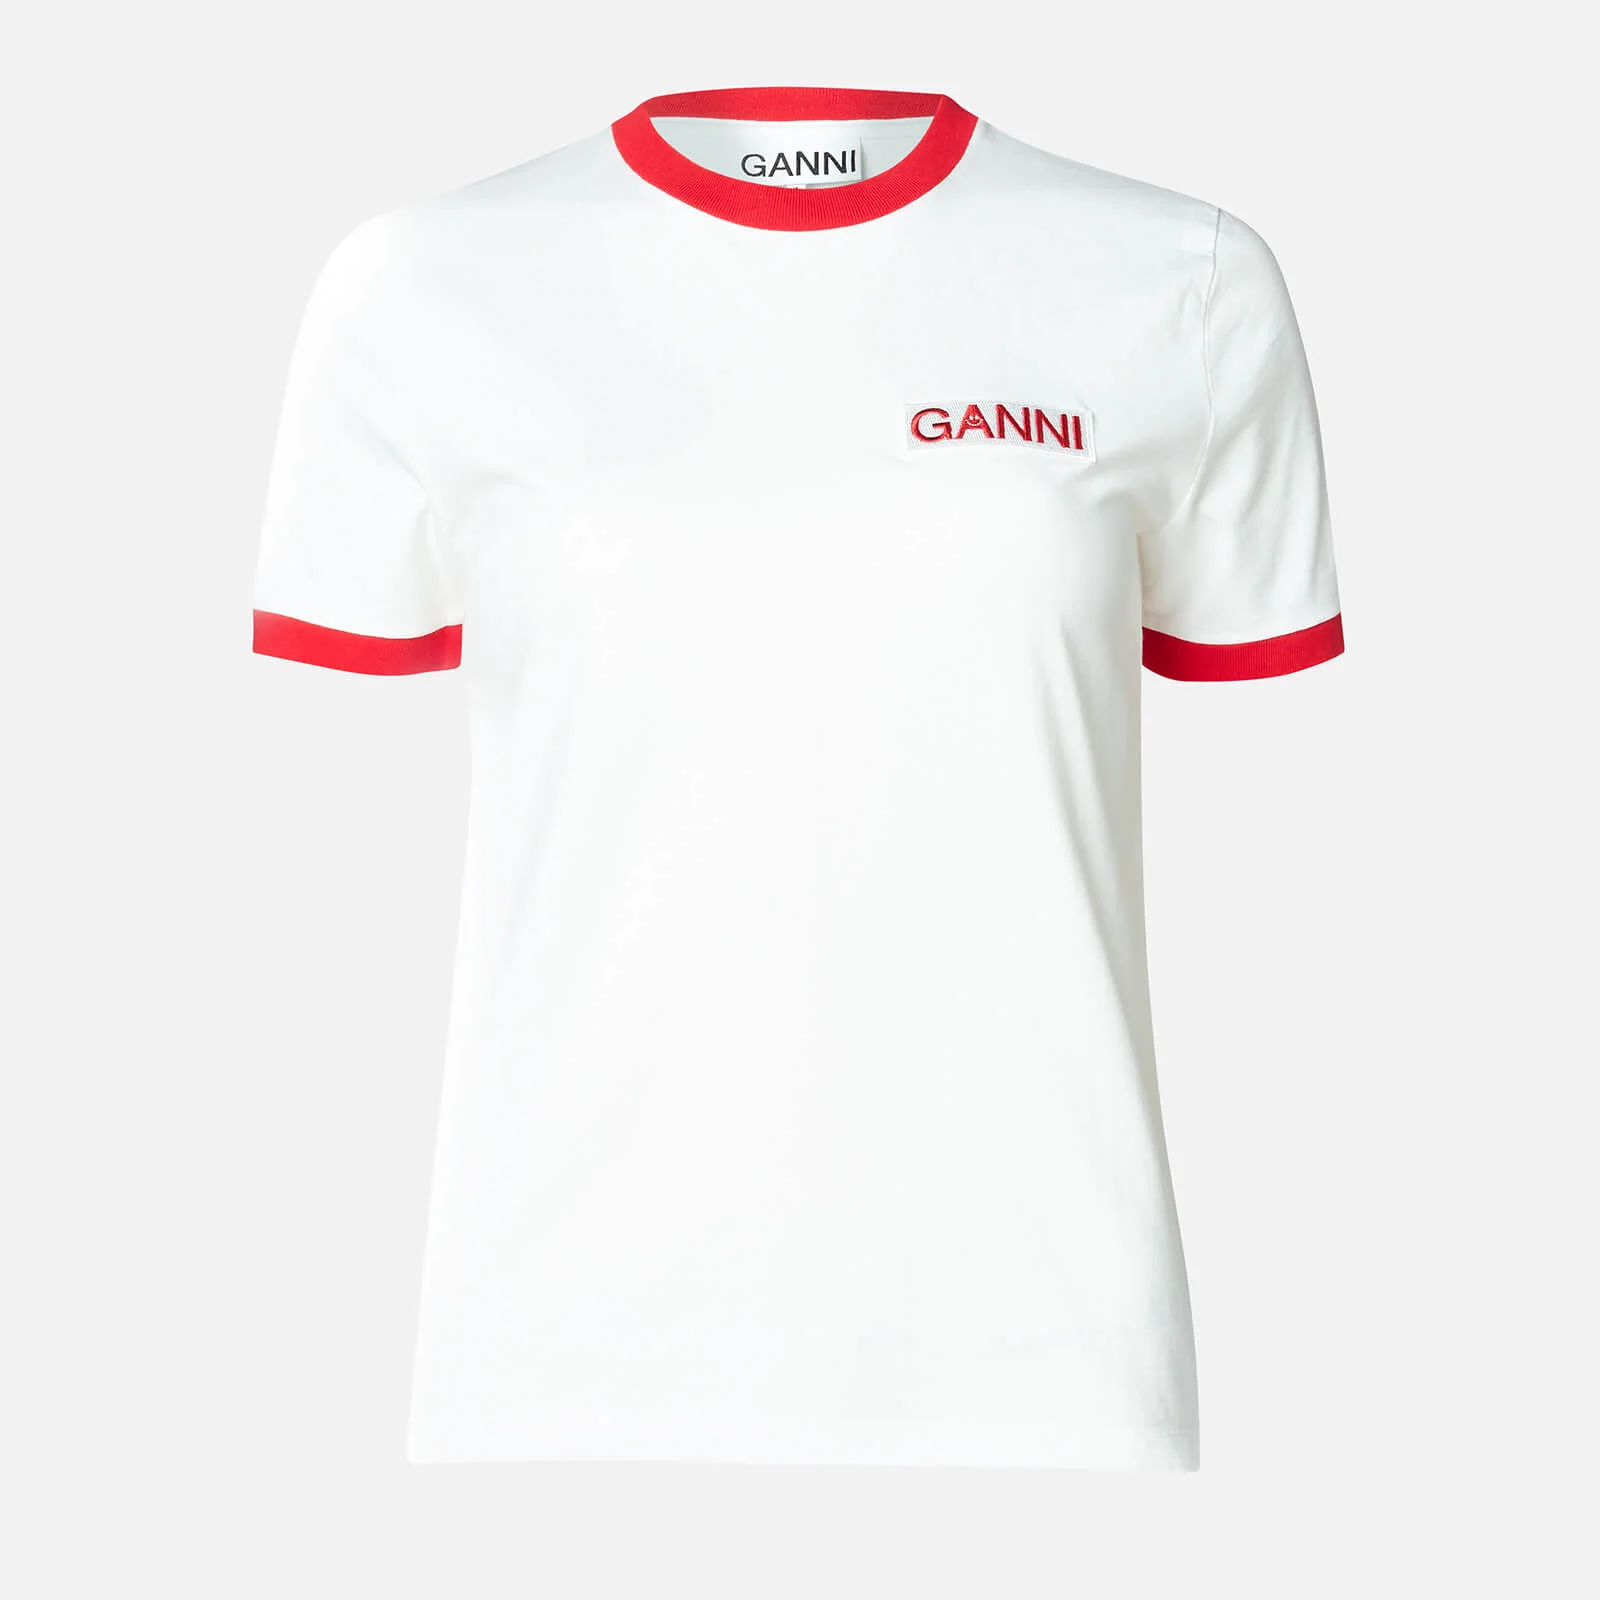 Ganni Women's Logo T-Shirt - White Image 1